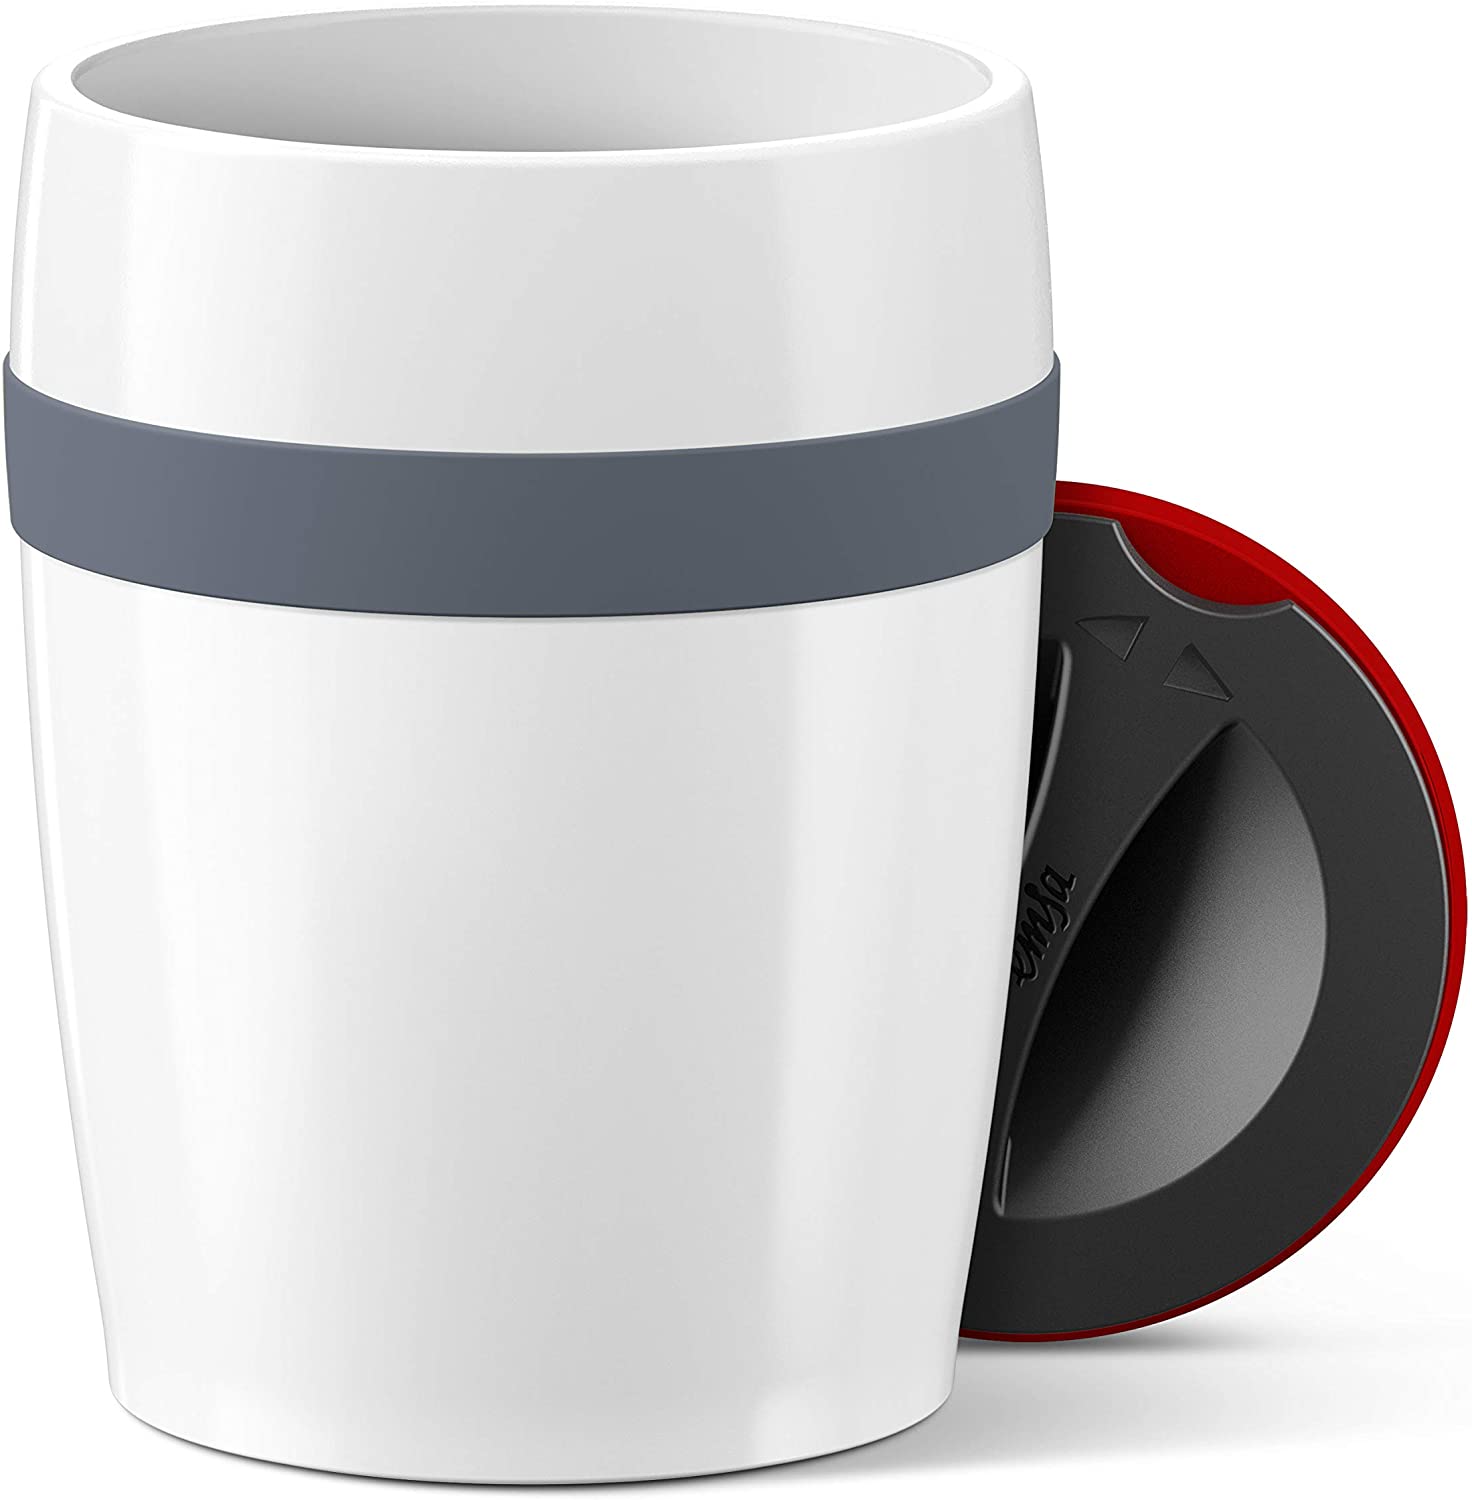 Emsa Travel Cup, Ceramic Insulated Mug, Ceramic Coating